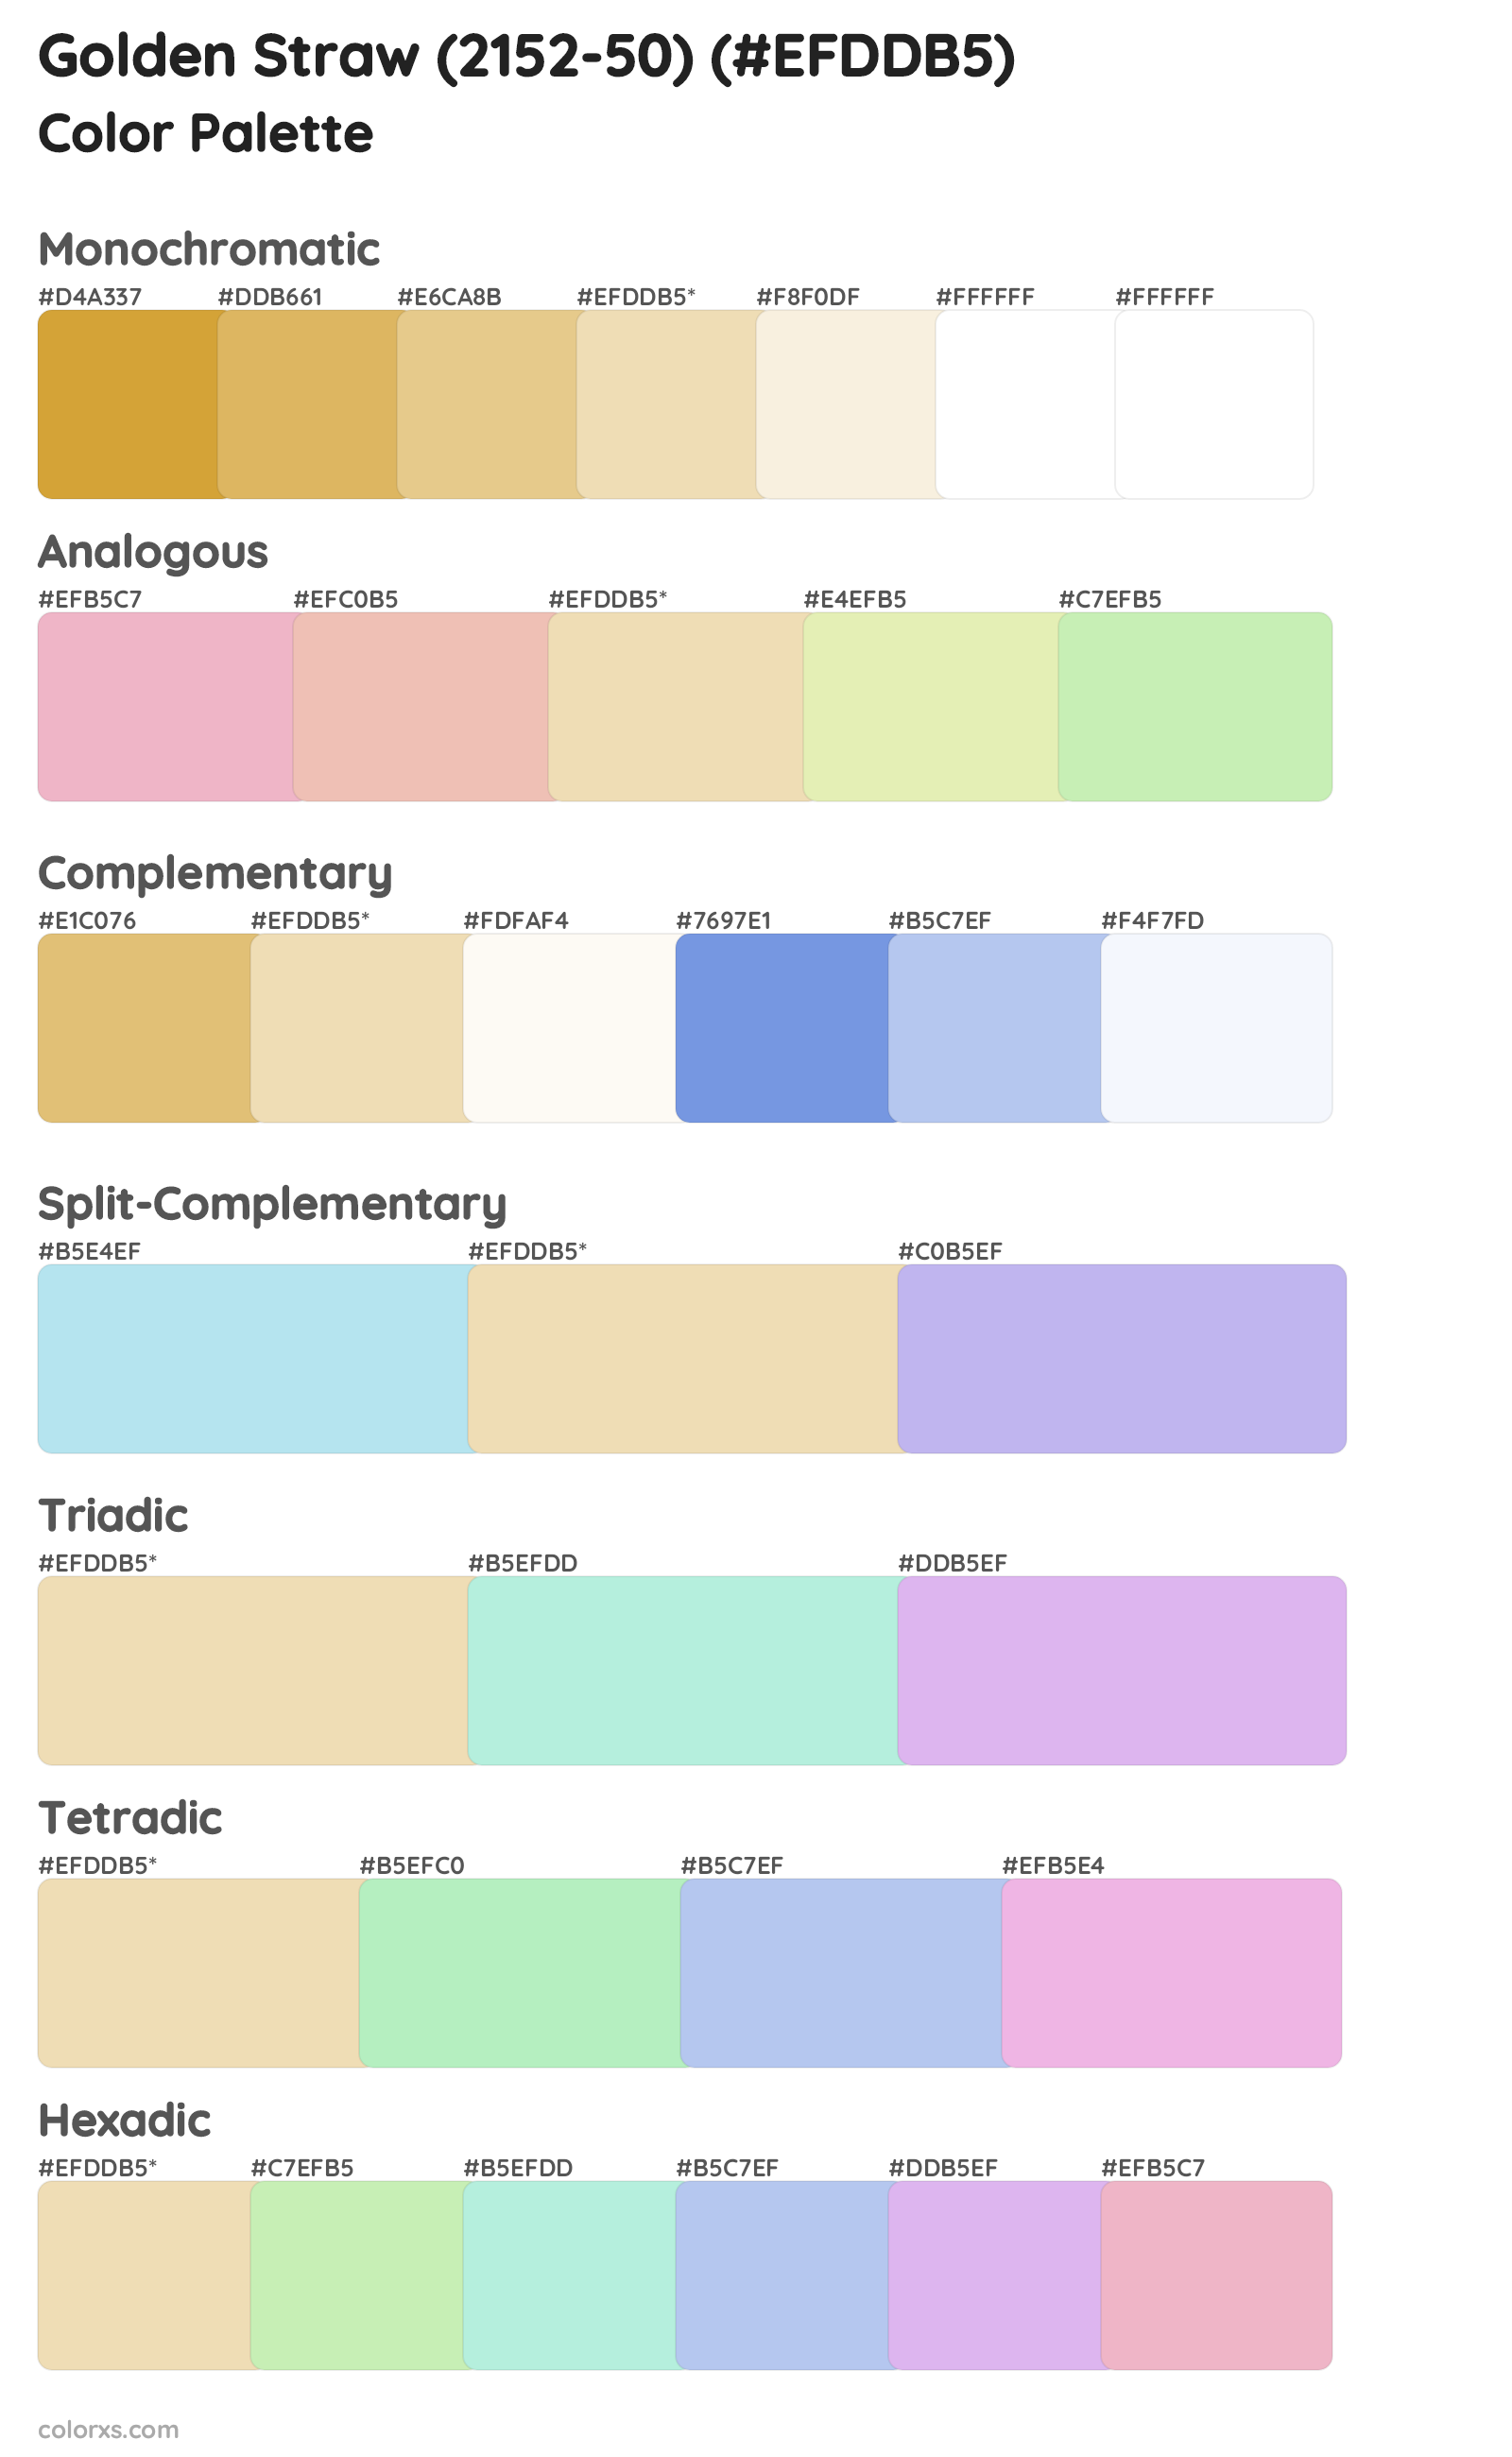 Golden Straw (2152-50) Color Scheme Palettes